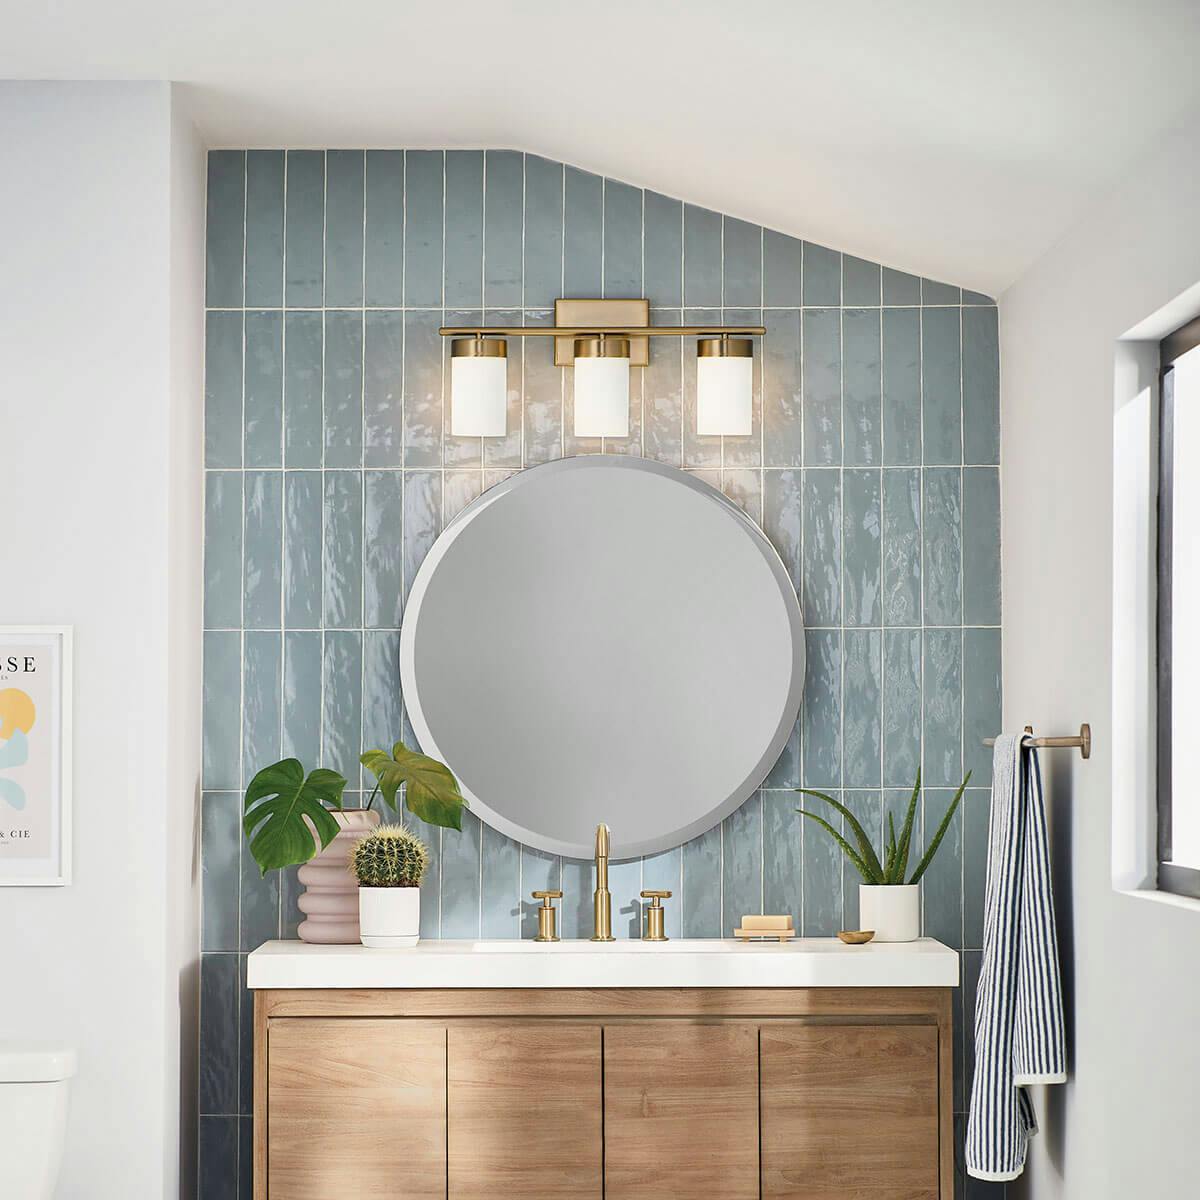 Day time Bathroom image featuring Ciona vanity light 55112BNB